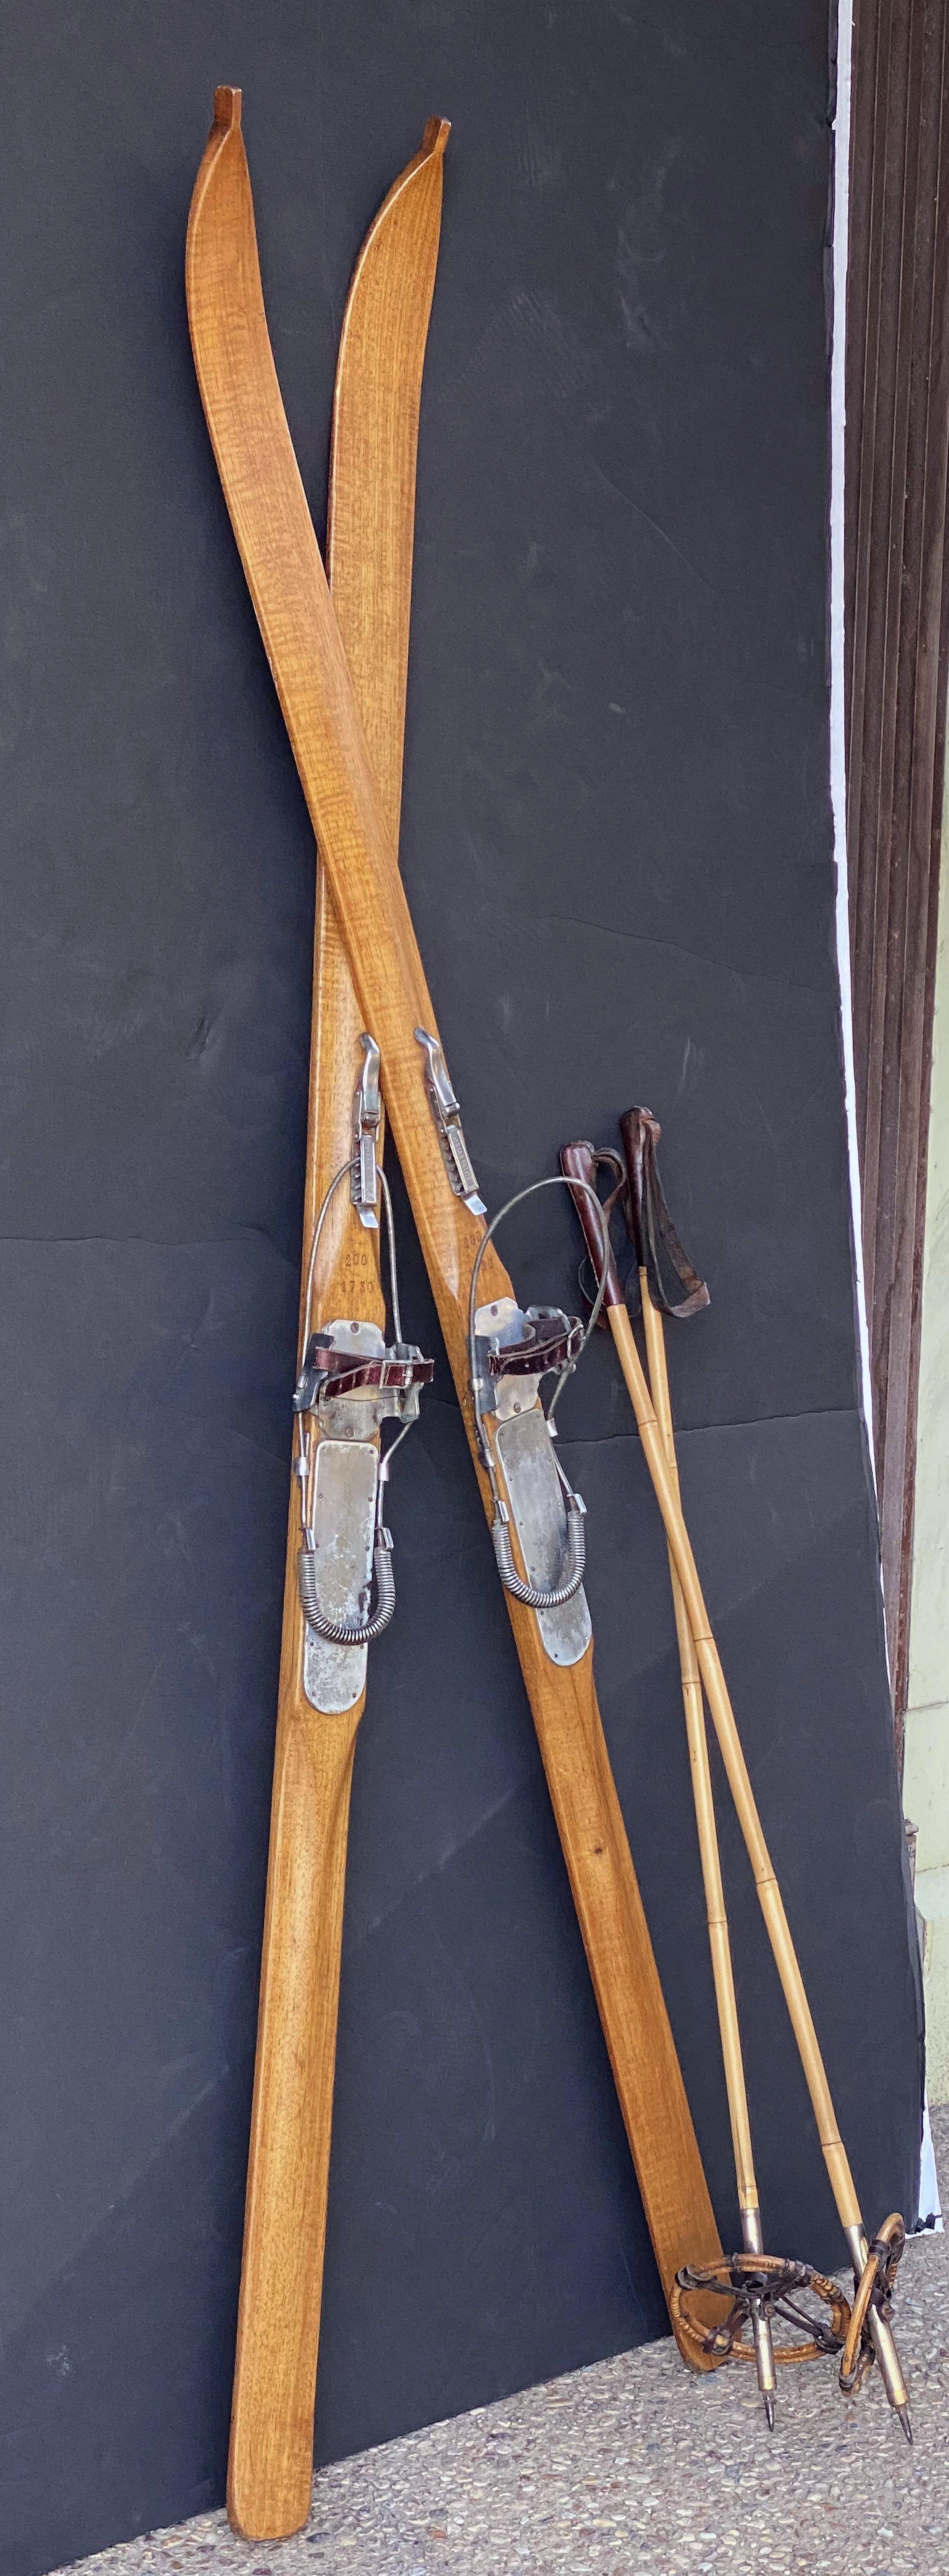 wooden skis vintage